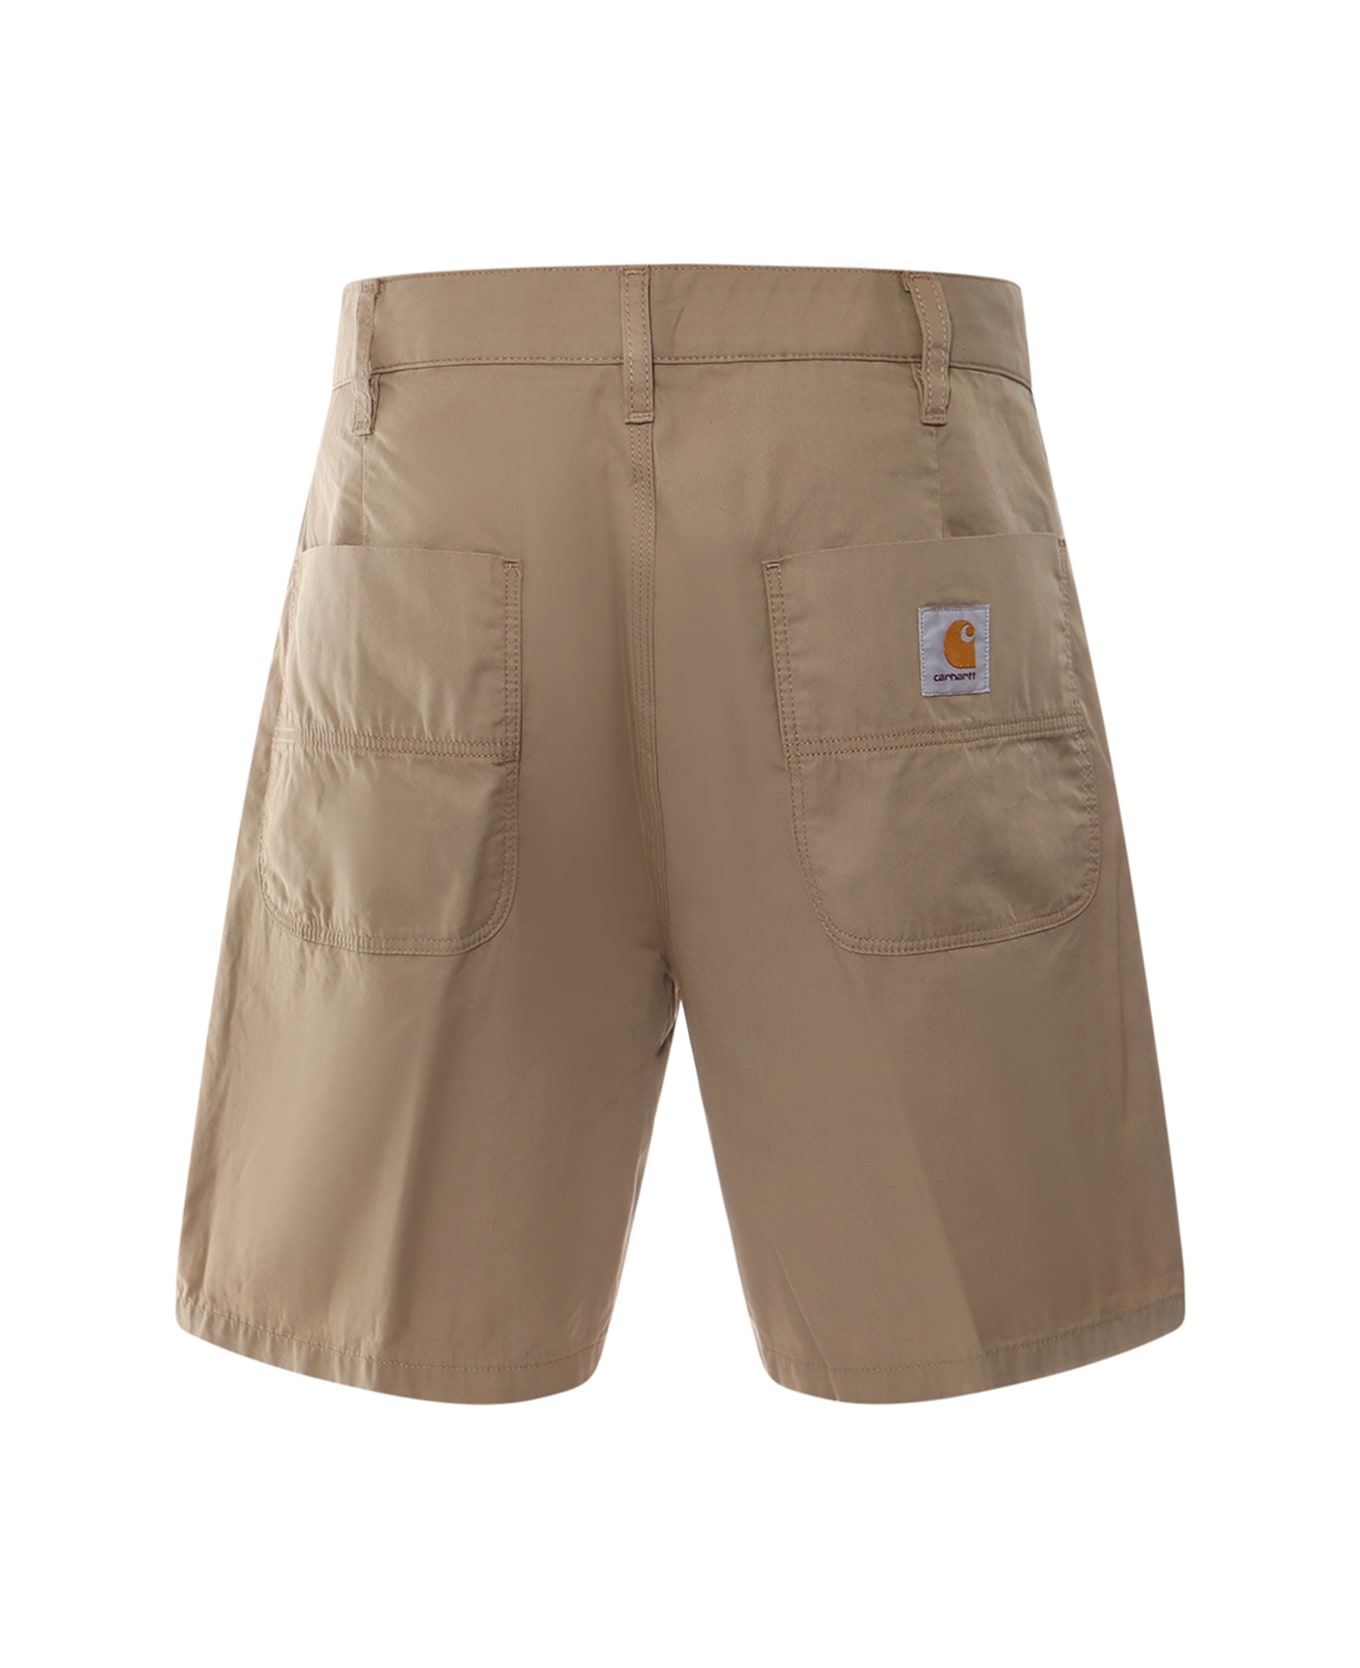 Carhartt Bermuda Shorts - Leather